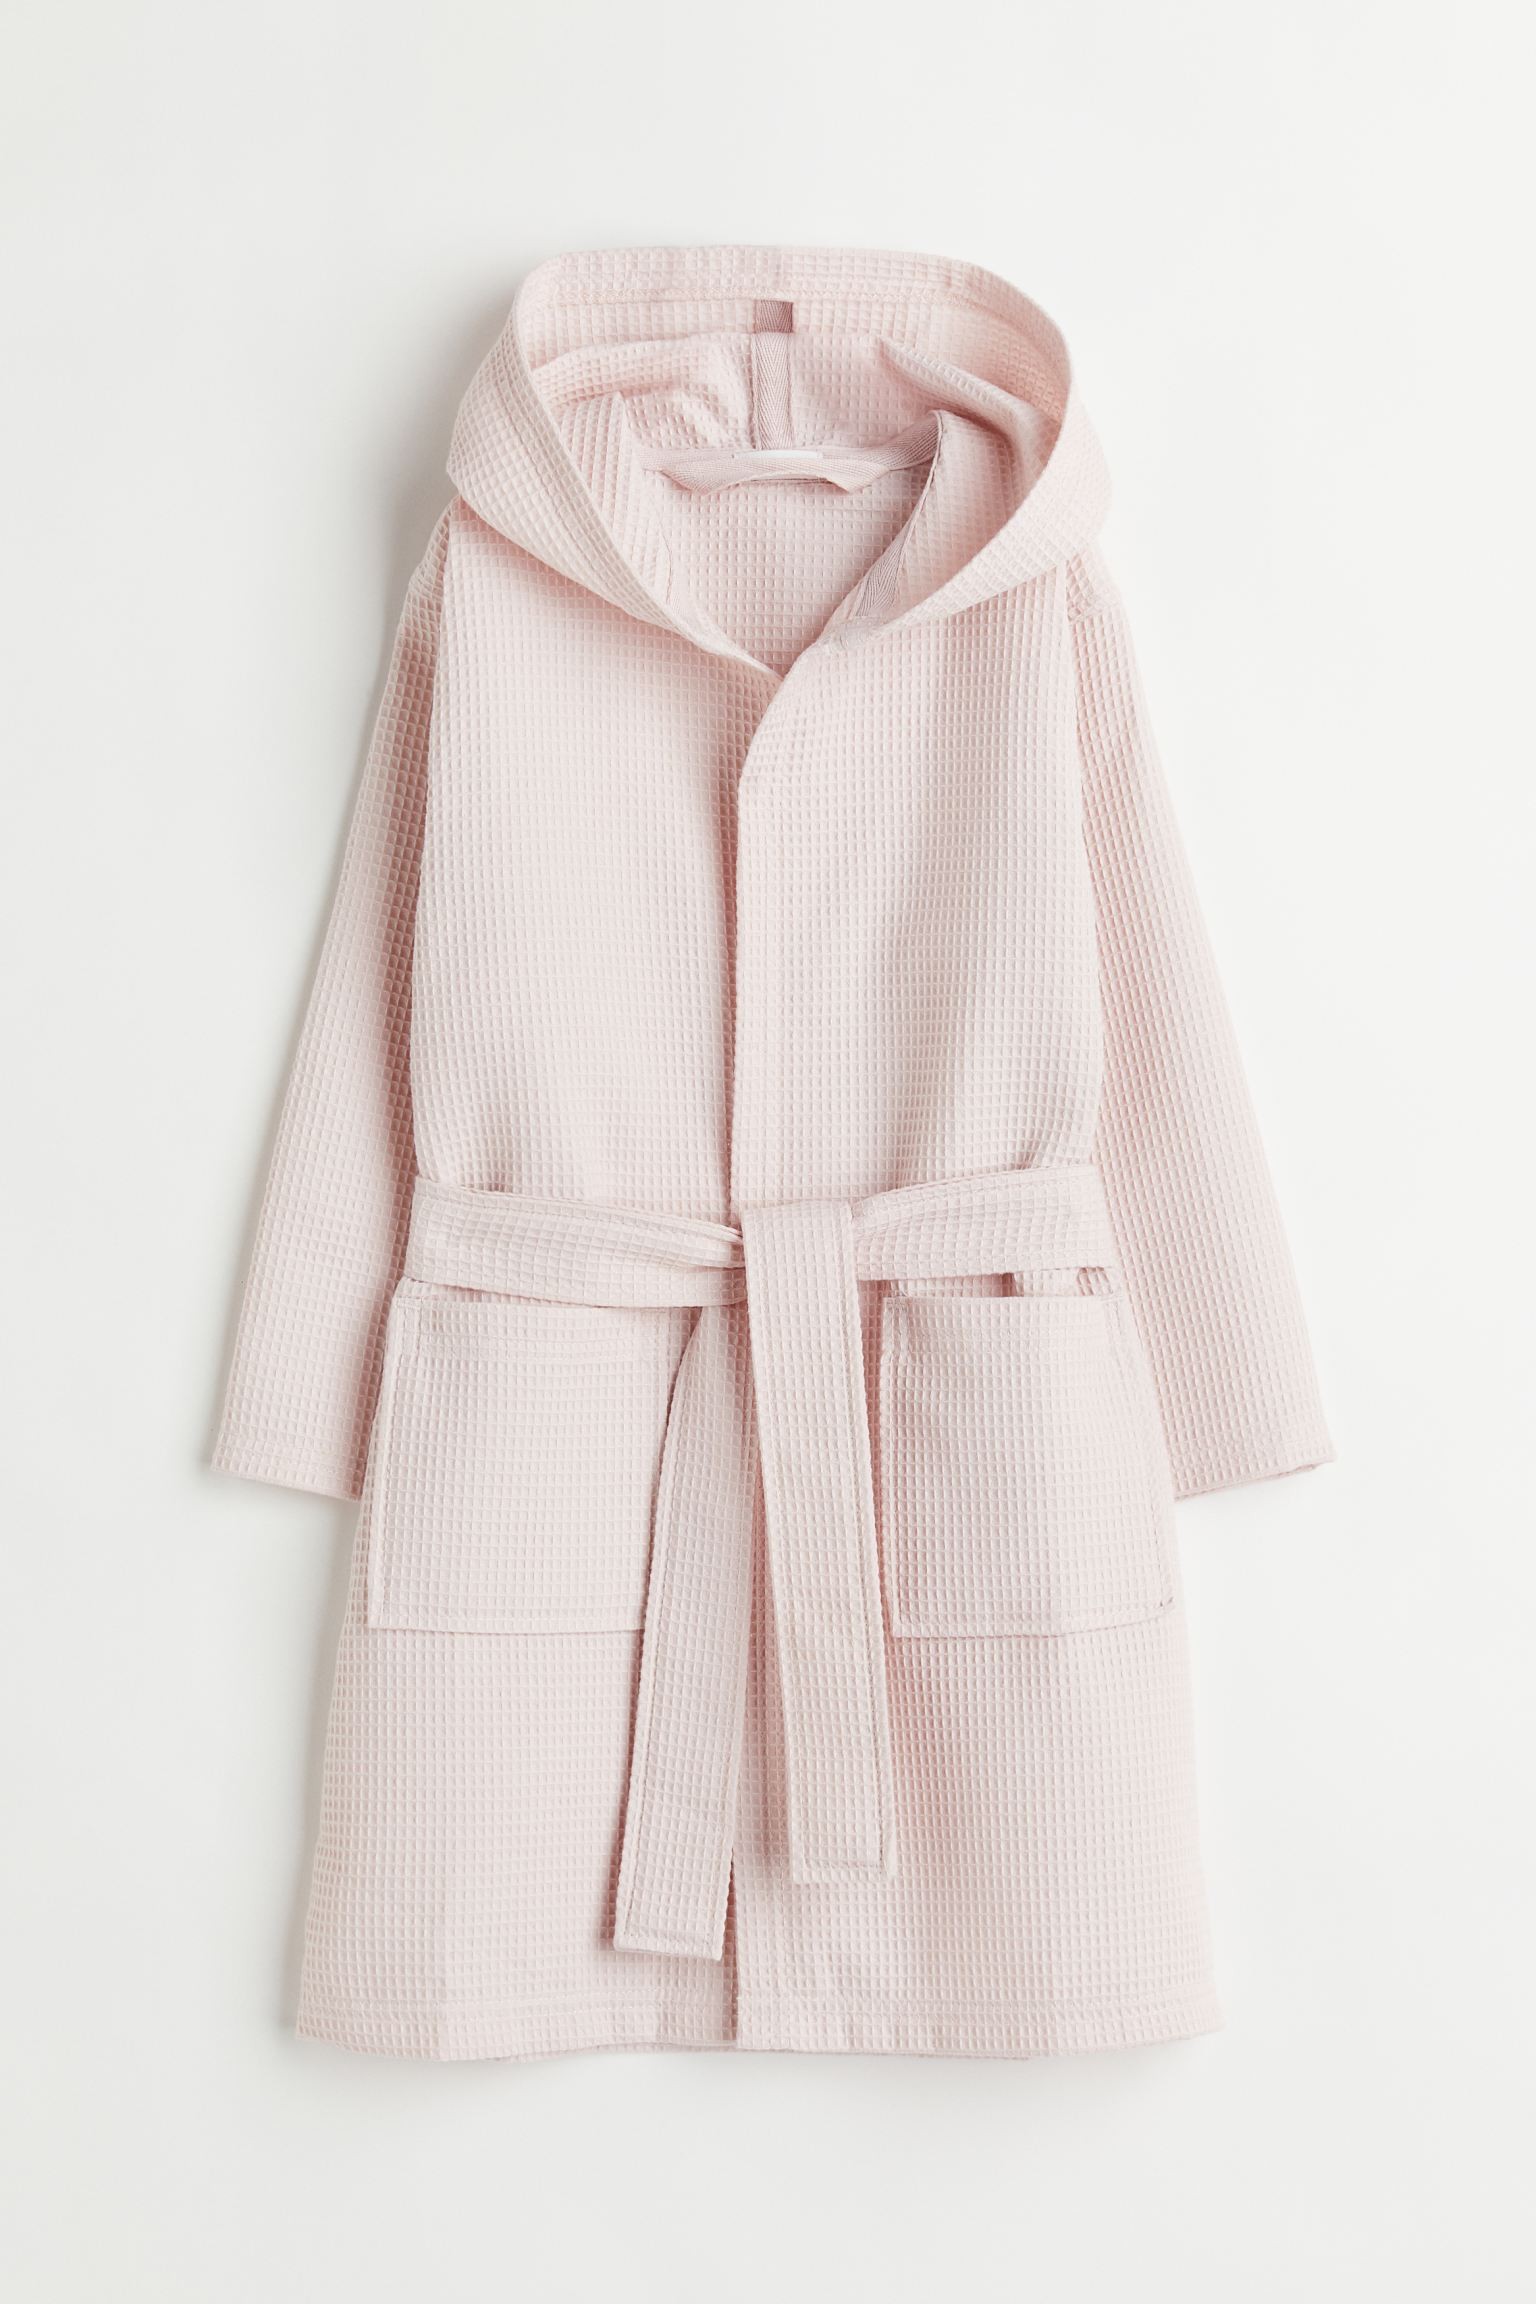 H&M Home Вафельный халат с капюшоном, светло-розовый, Разные размеры 1030019002 1030019002